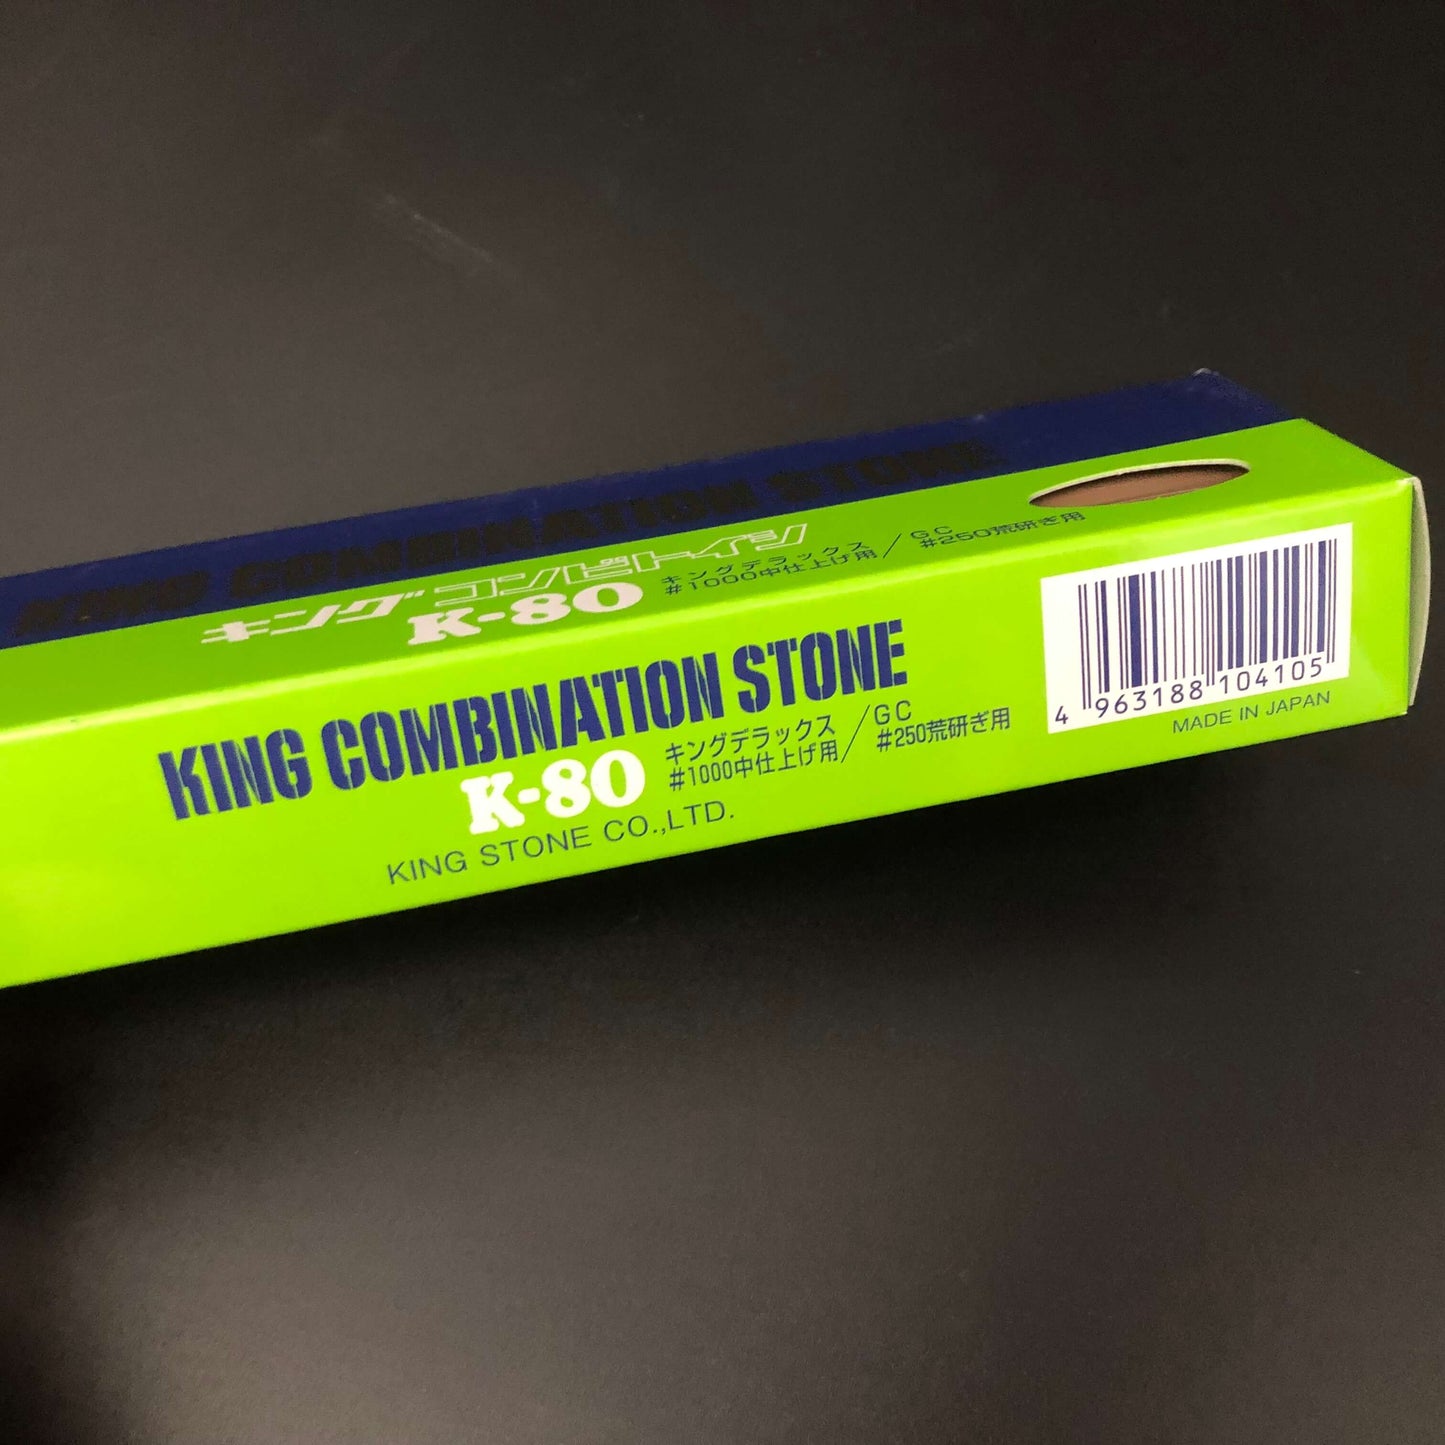 KING DX K-80 #250/#1000 Sharpening Whetstone